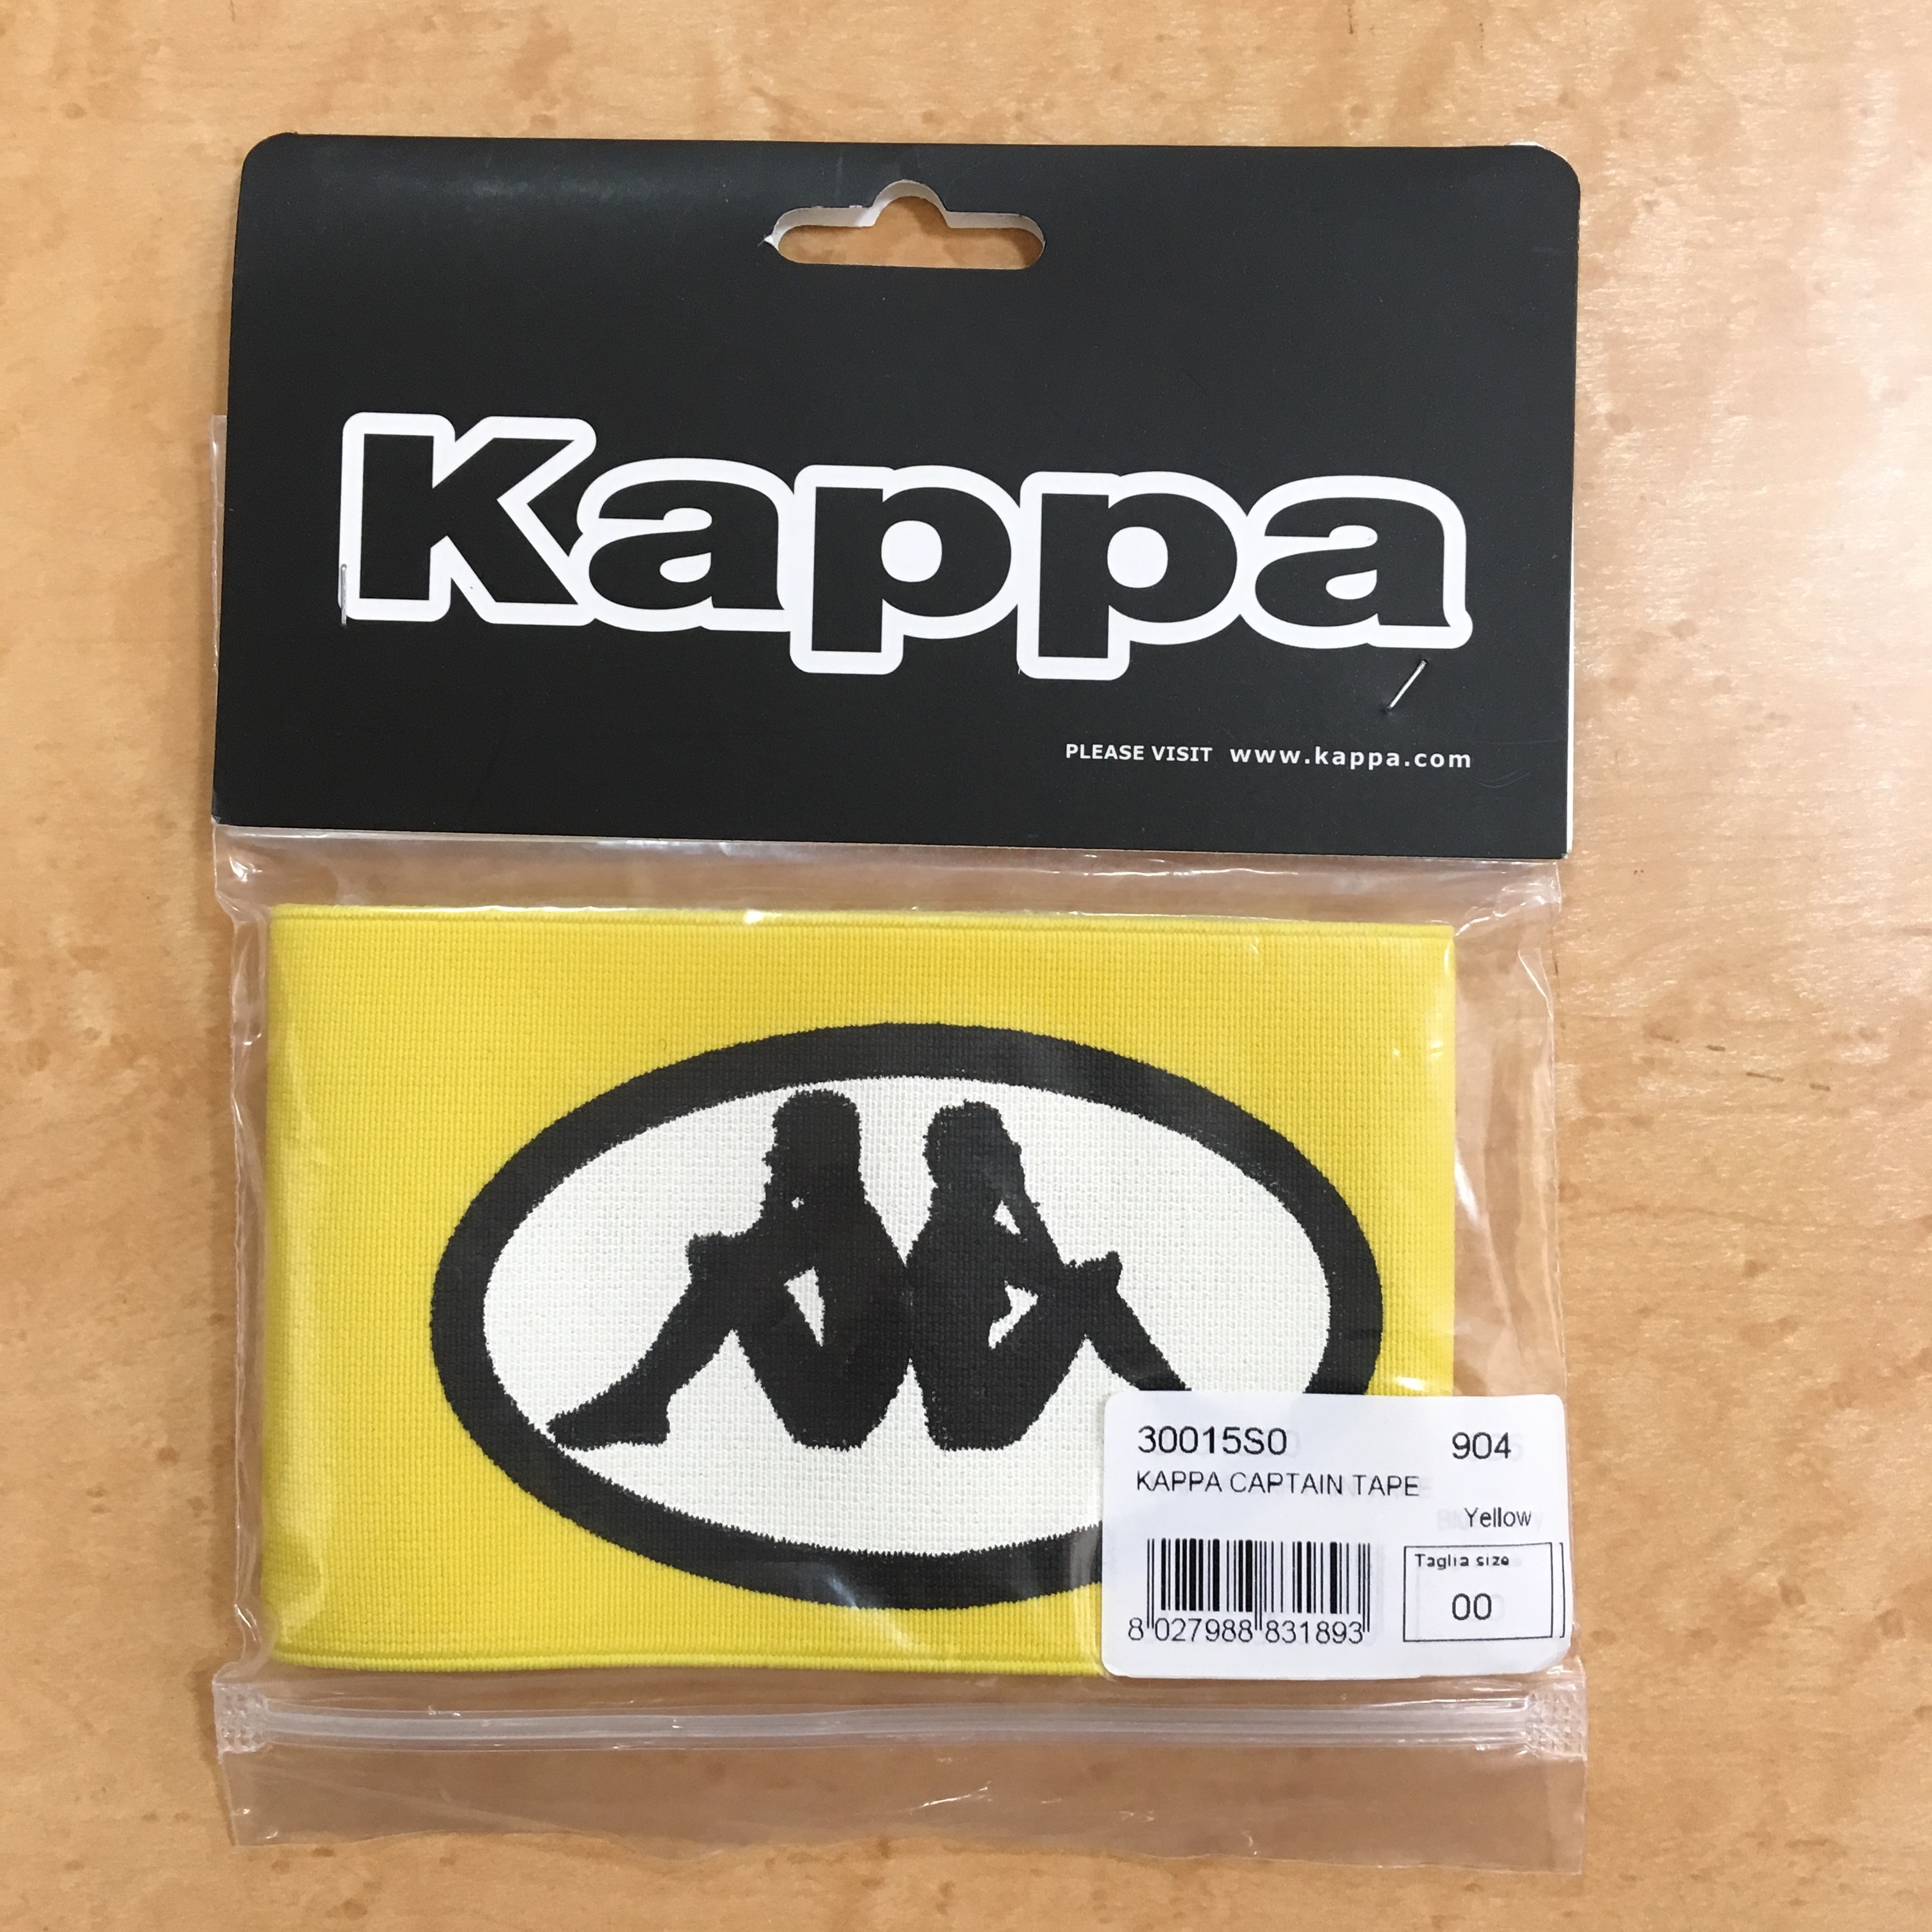 Kappa カッパ サッカー キャプテンマーク Fascia Capitano アクセサリー Freak スポーツウェア通販 海外ブランド 日本国内未入荷 海外直輸入